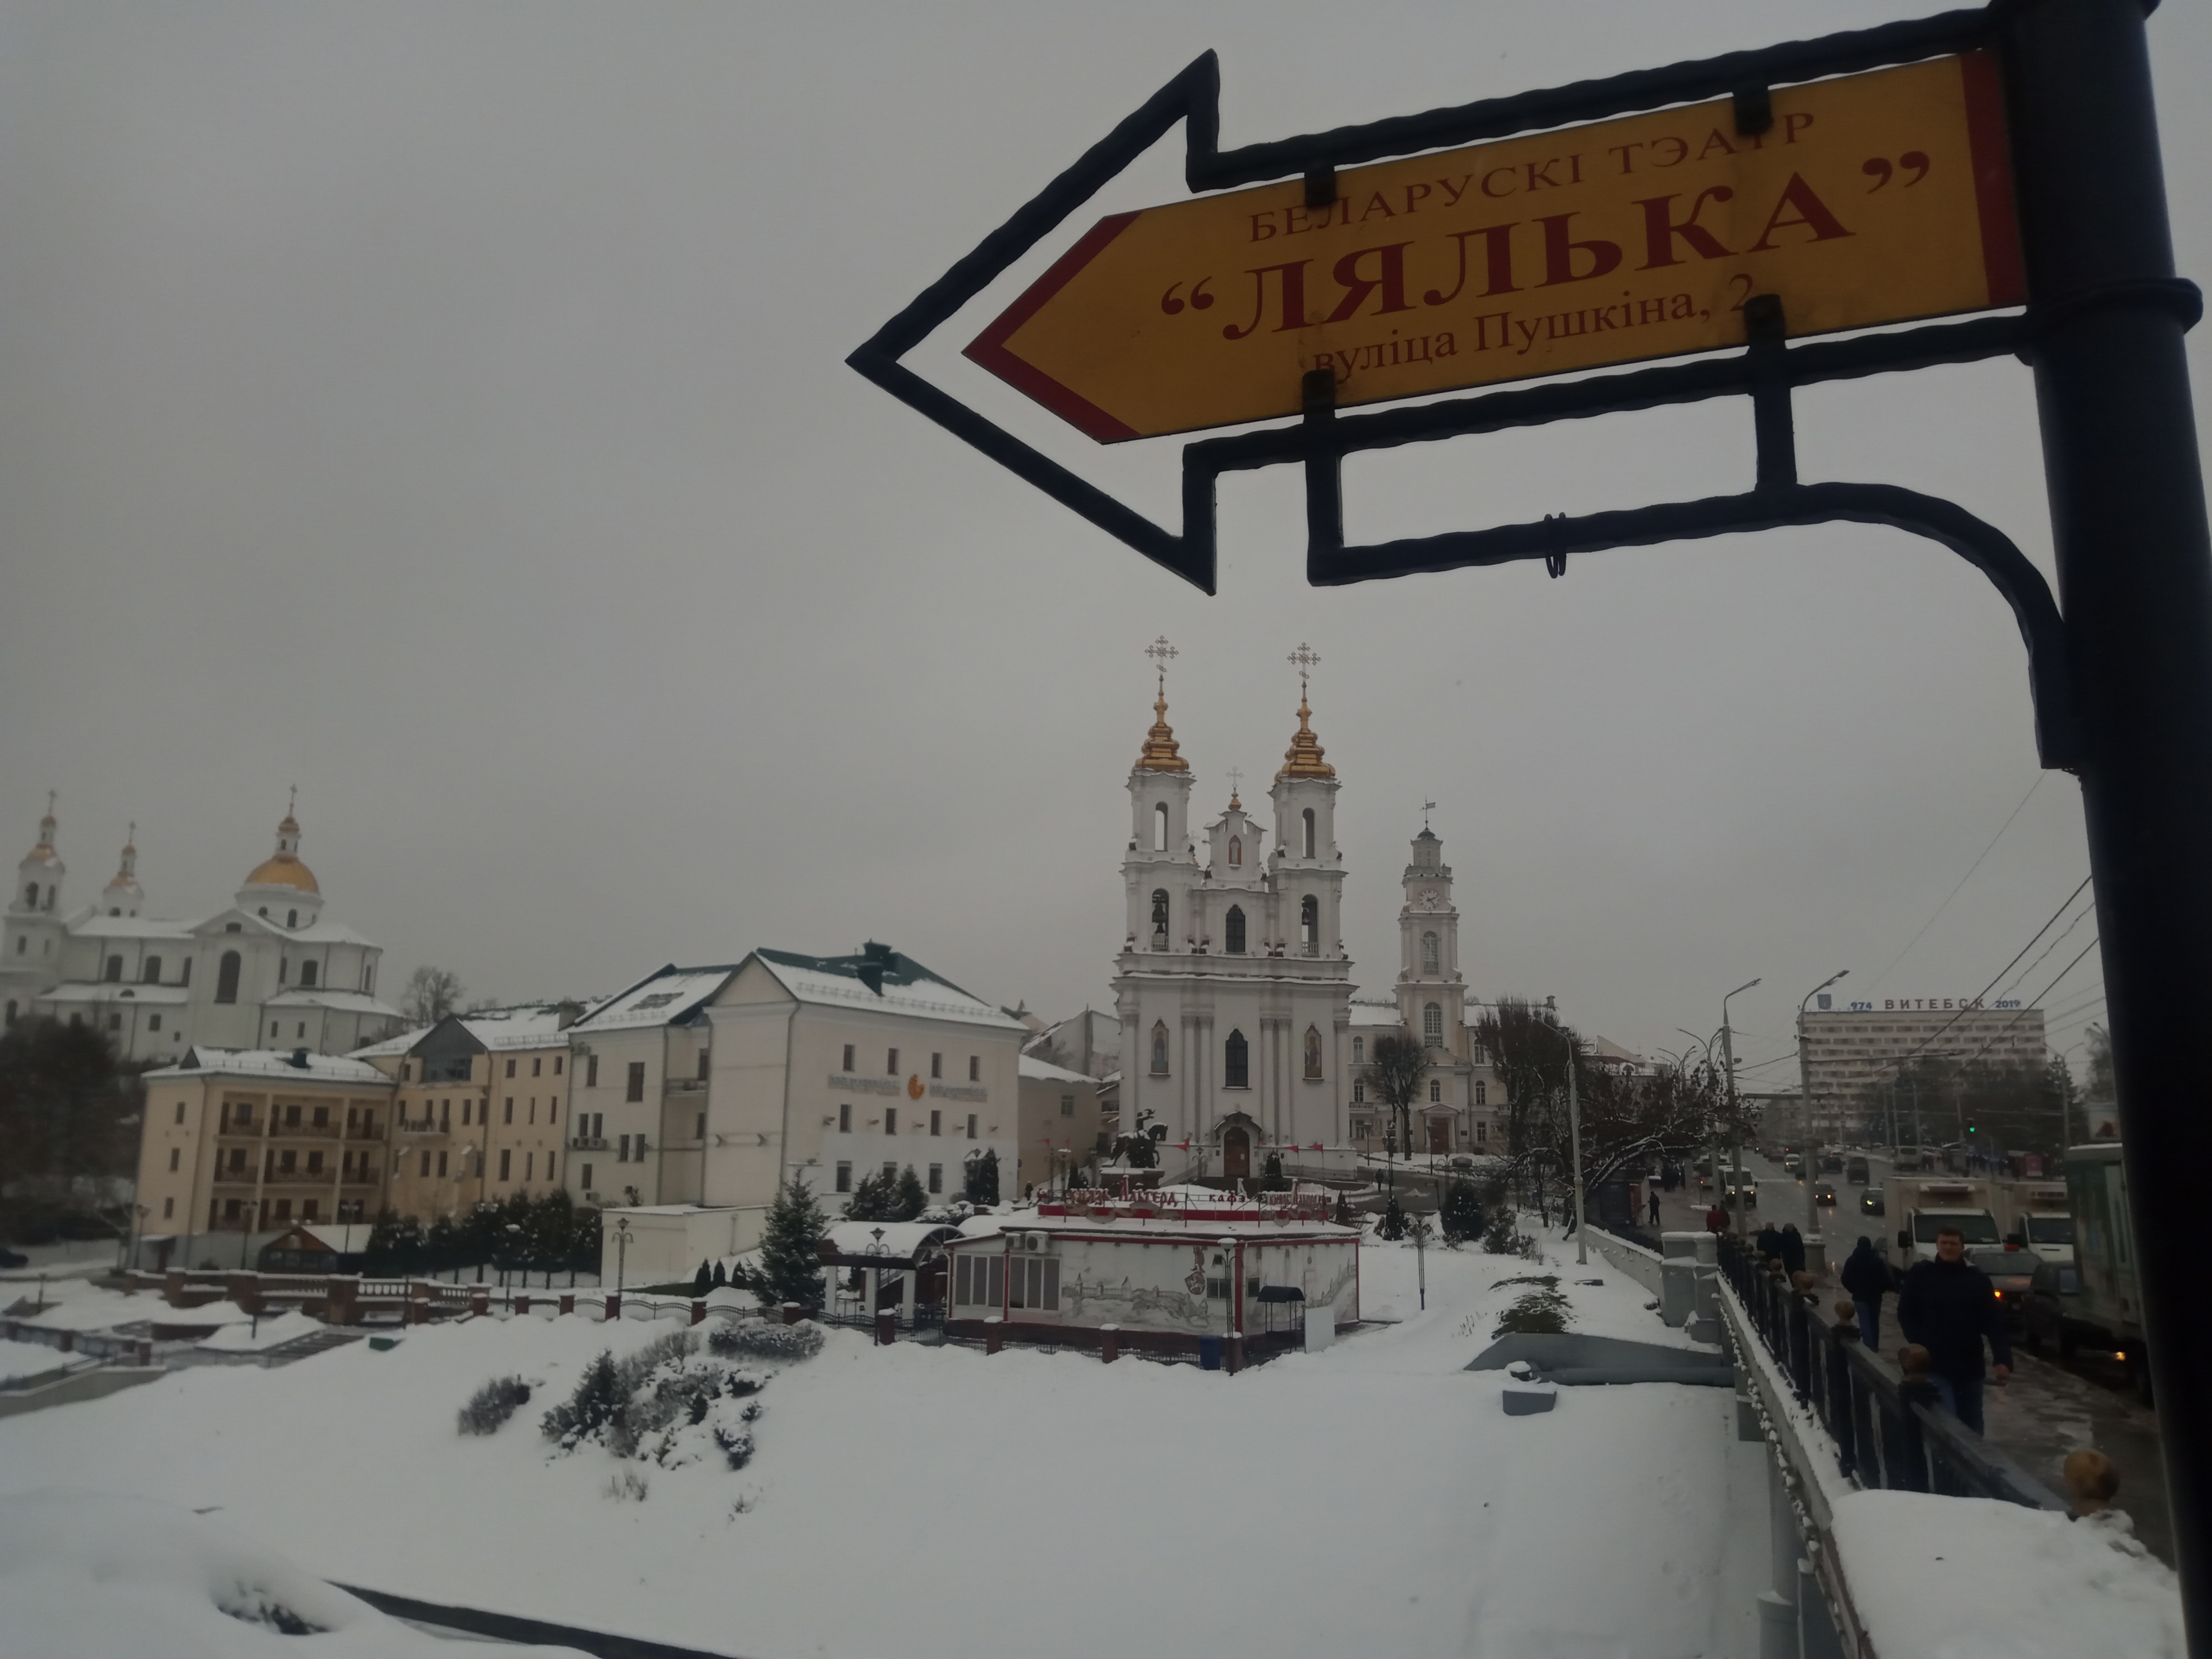 Back in USSR: путешествие в Белоруссию на Haval H9